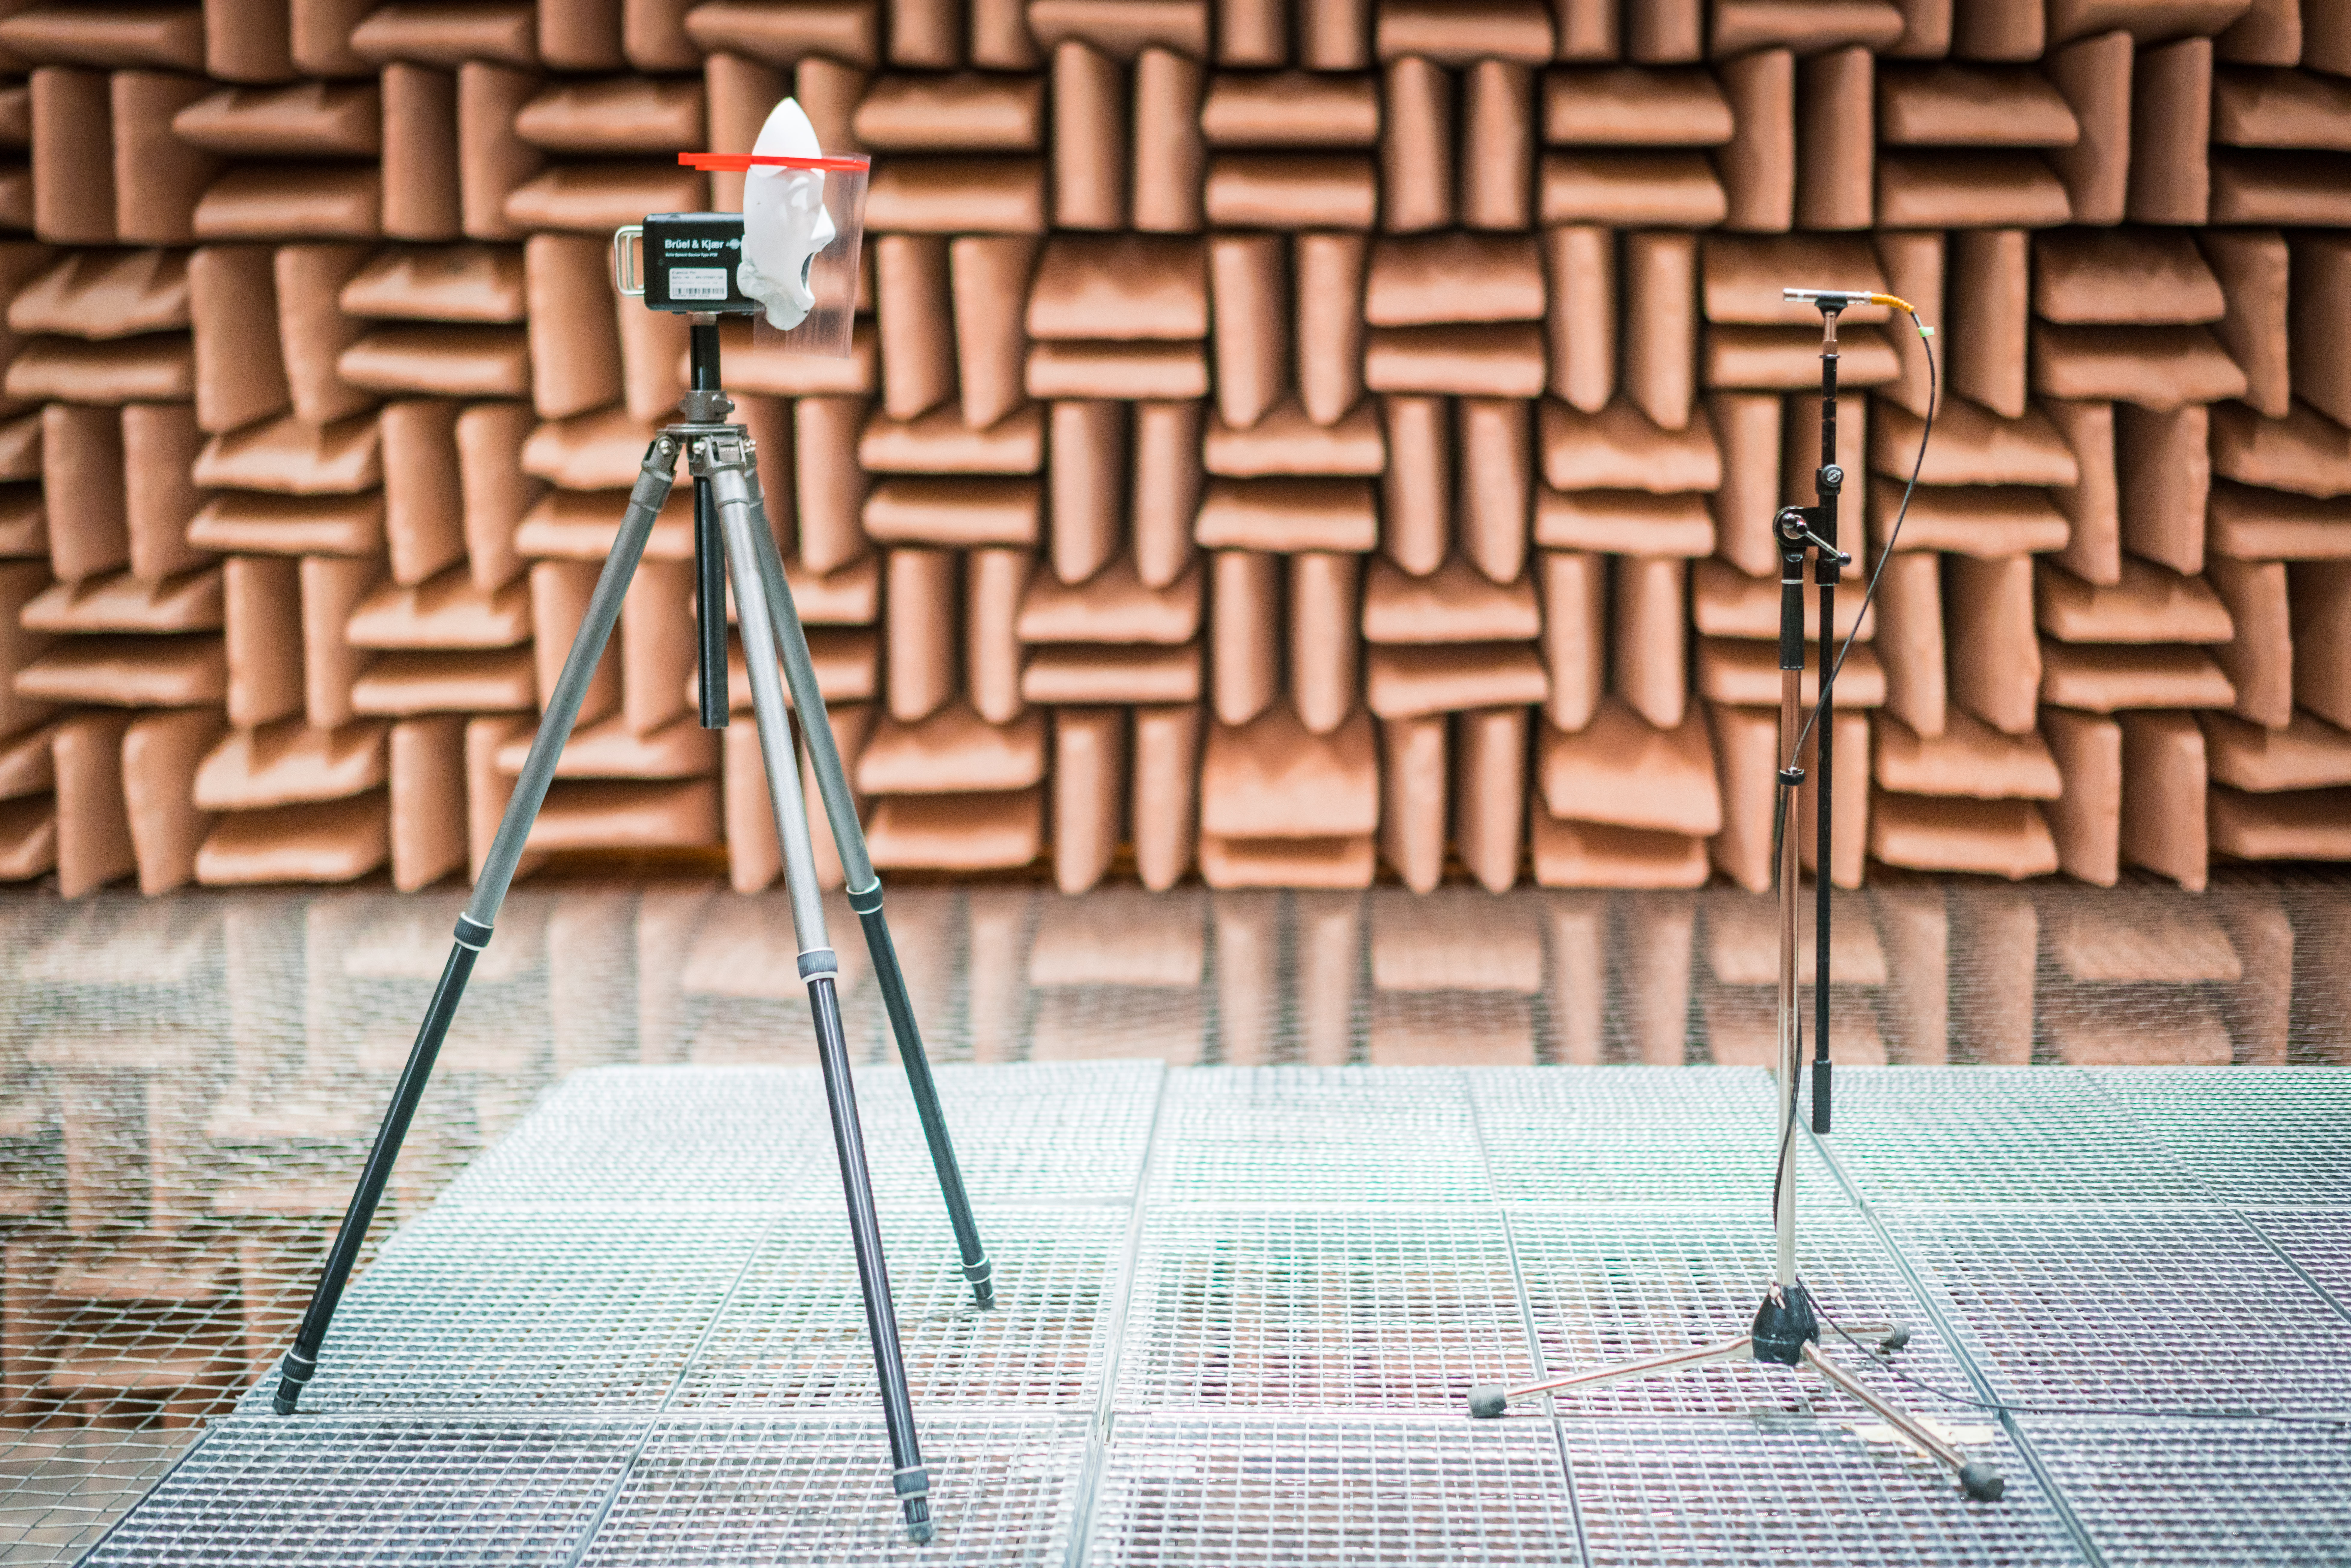 Measuring microphones record signals